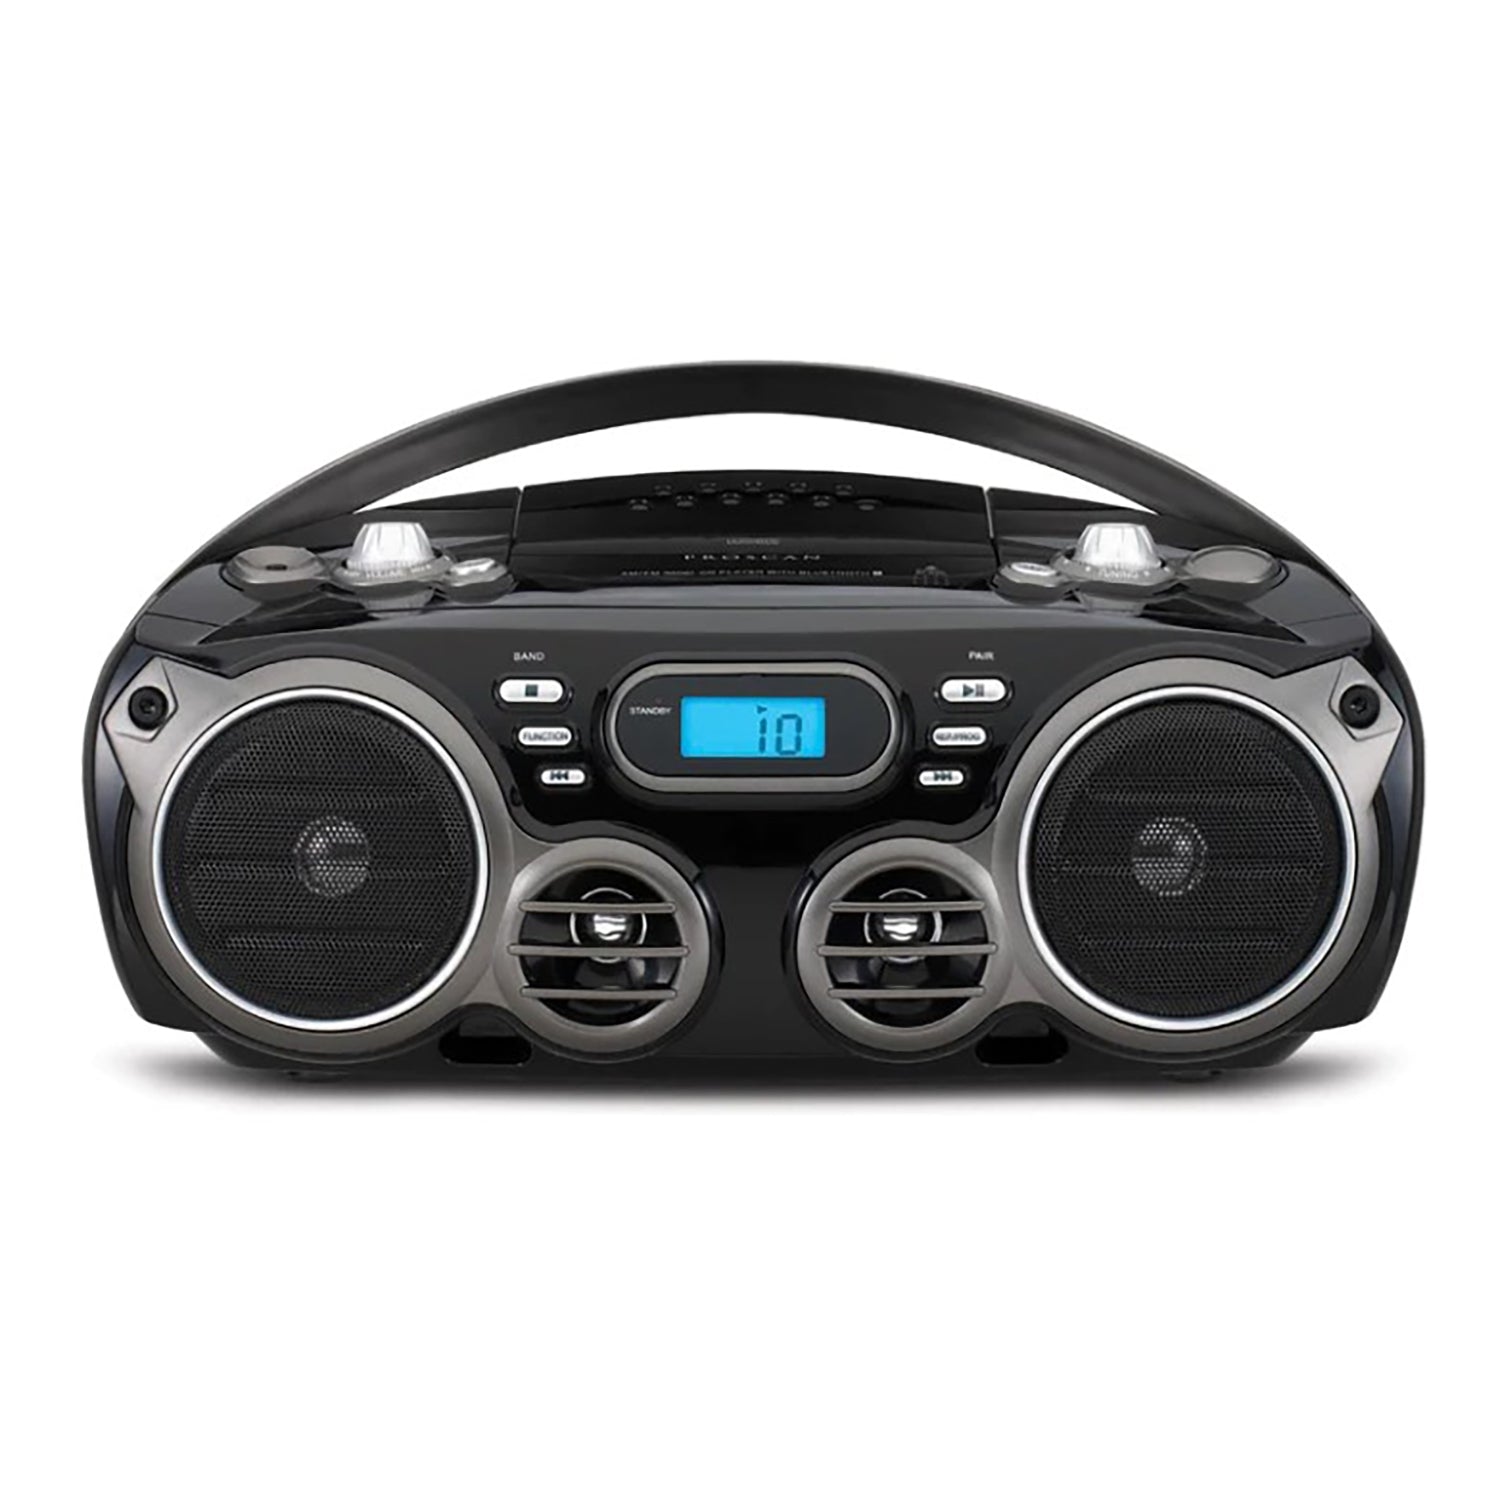 Proscan - BoomBox / Lecteur CD Portable avec Bluetooth, Radio AM